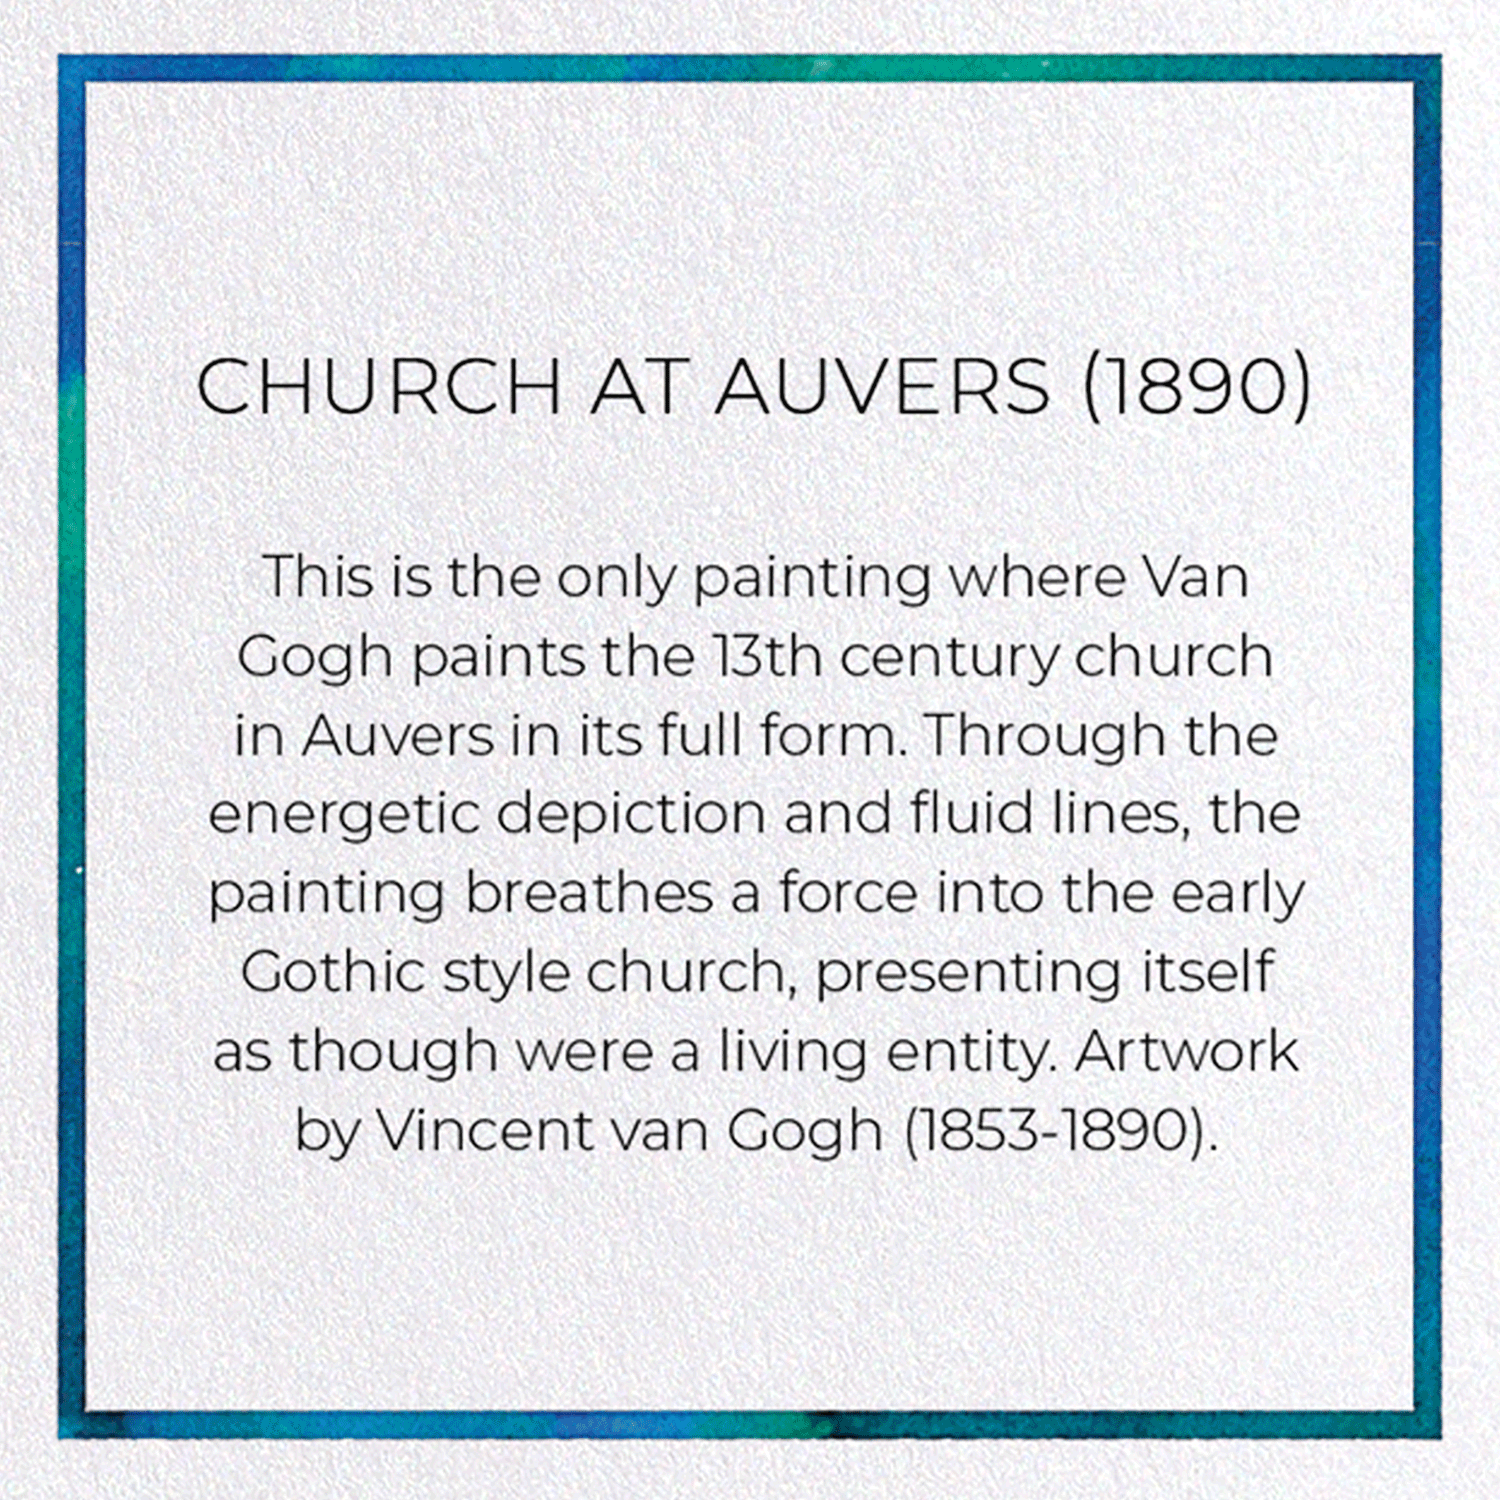 CHURCH AT AUVERS (1890)